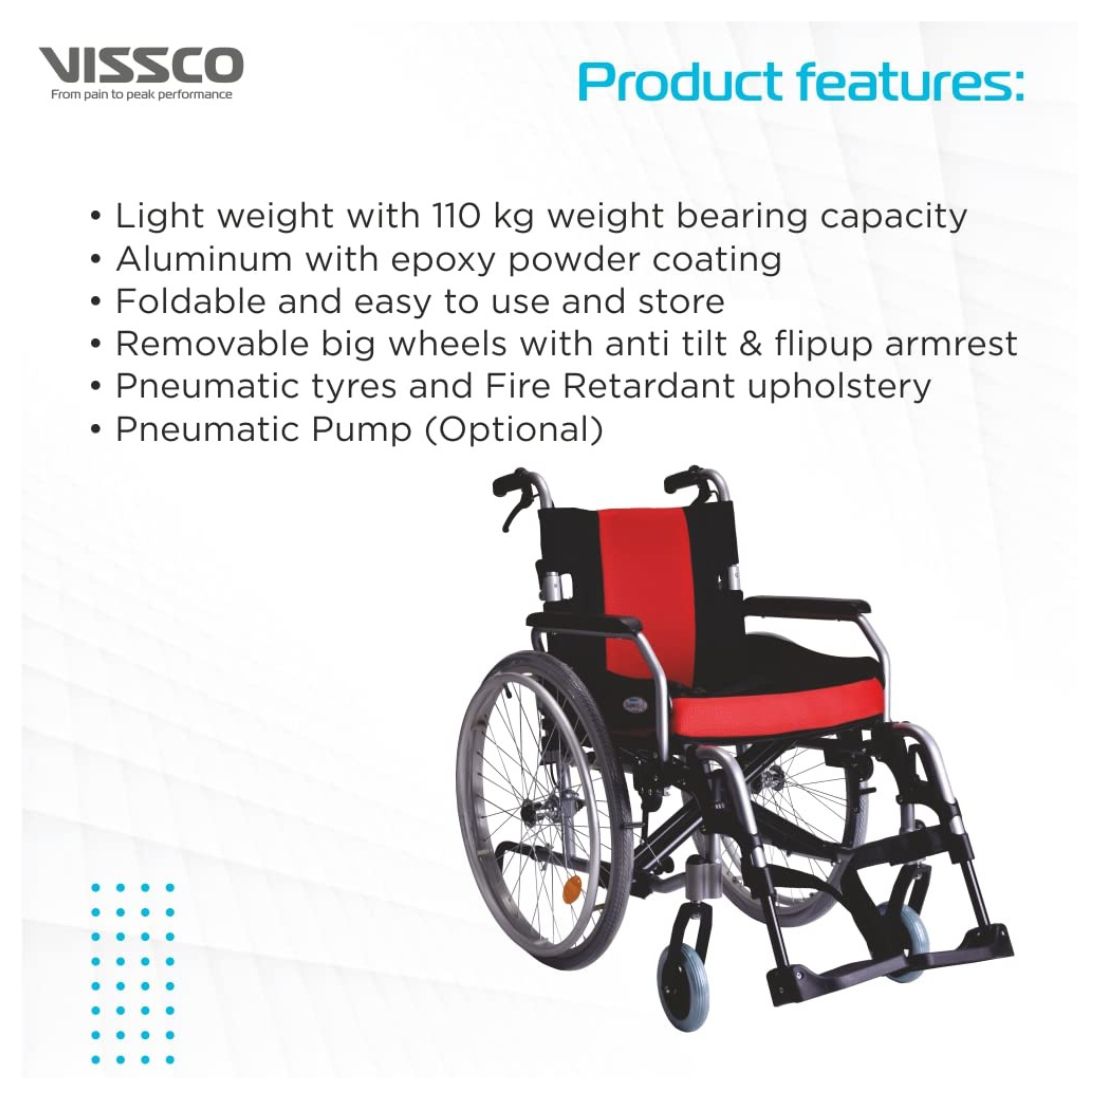 Vissco Superio Aluminium Wheelchair with removal Big Wheels